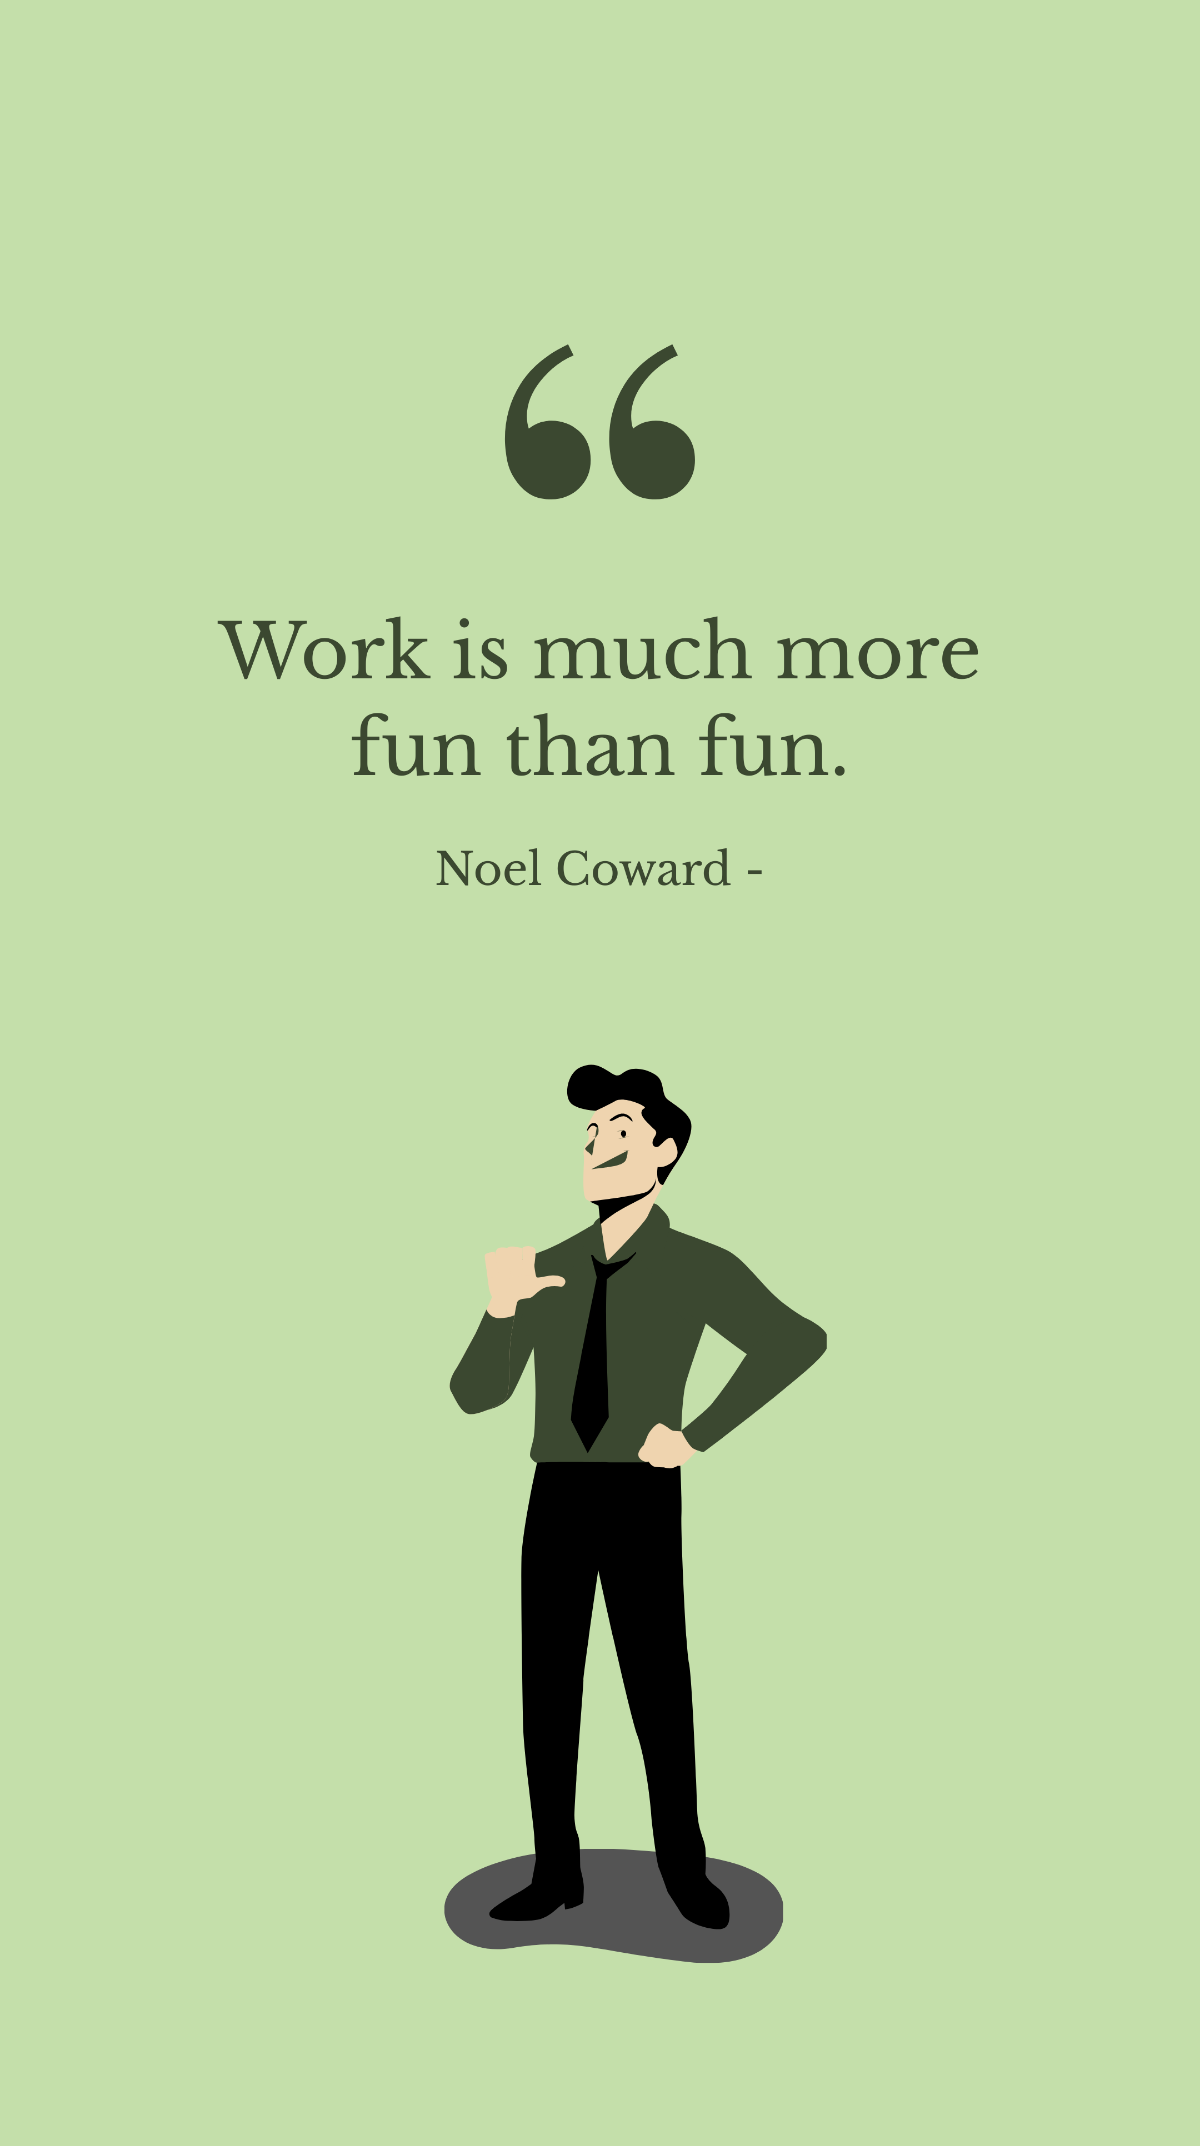 Noel Coward - Work is much more fun than fun. Template